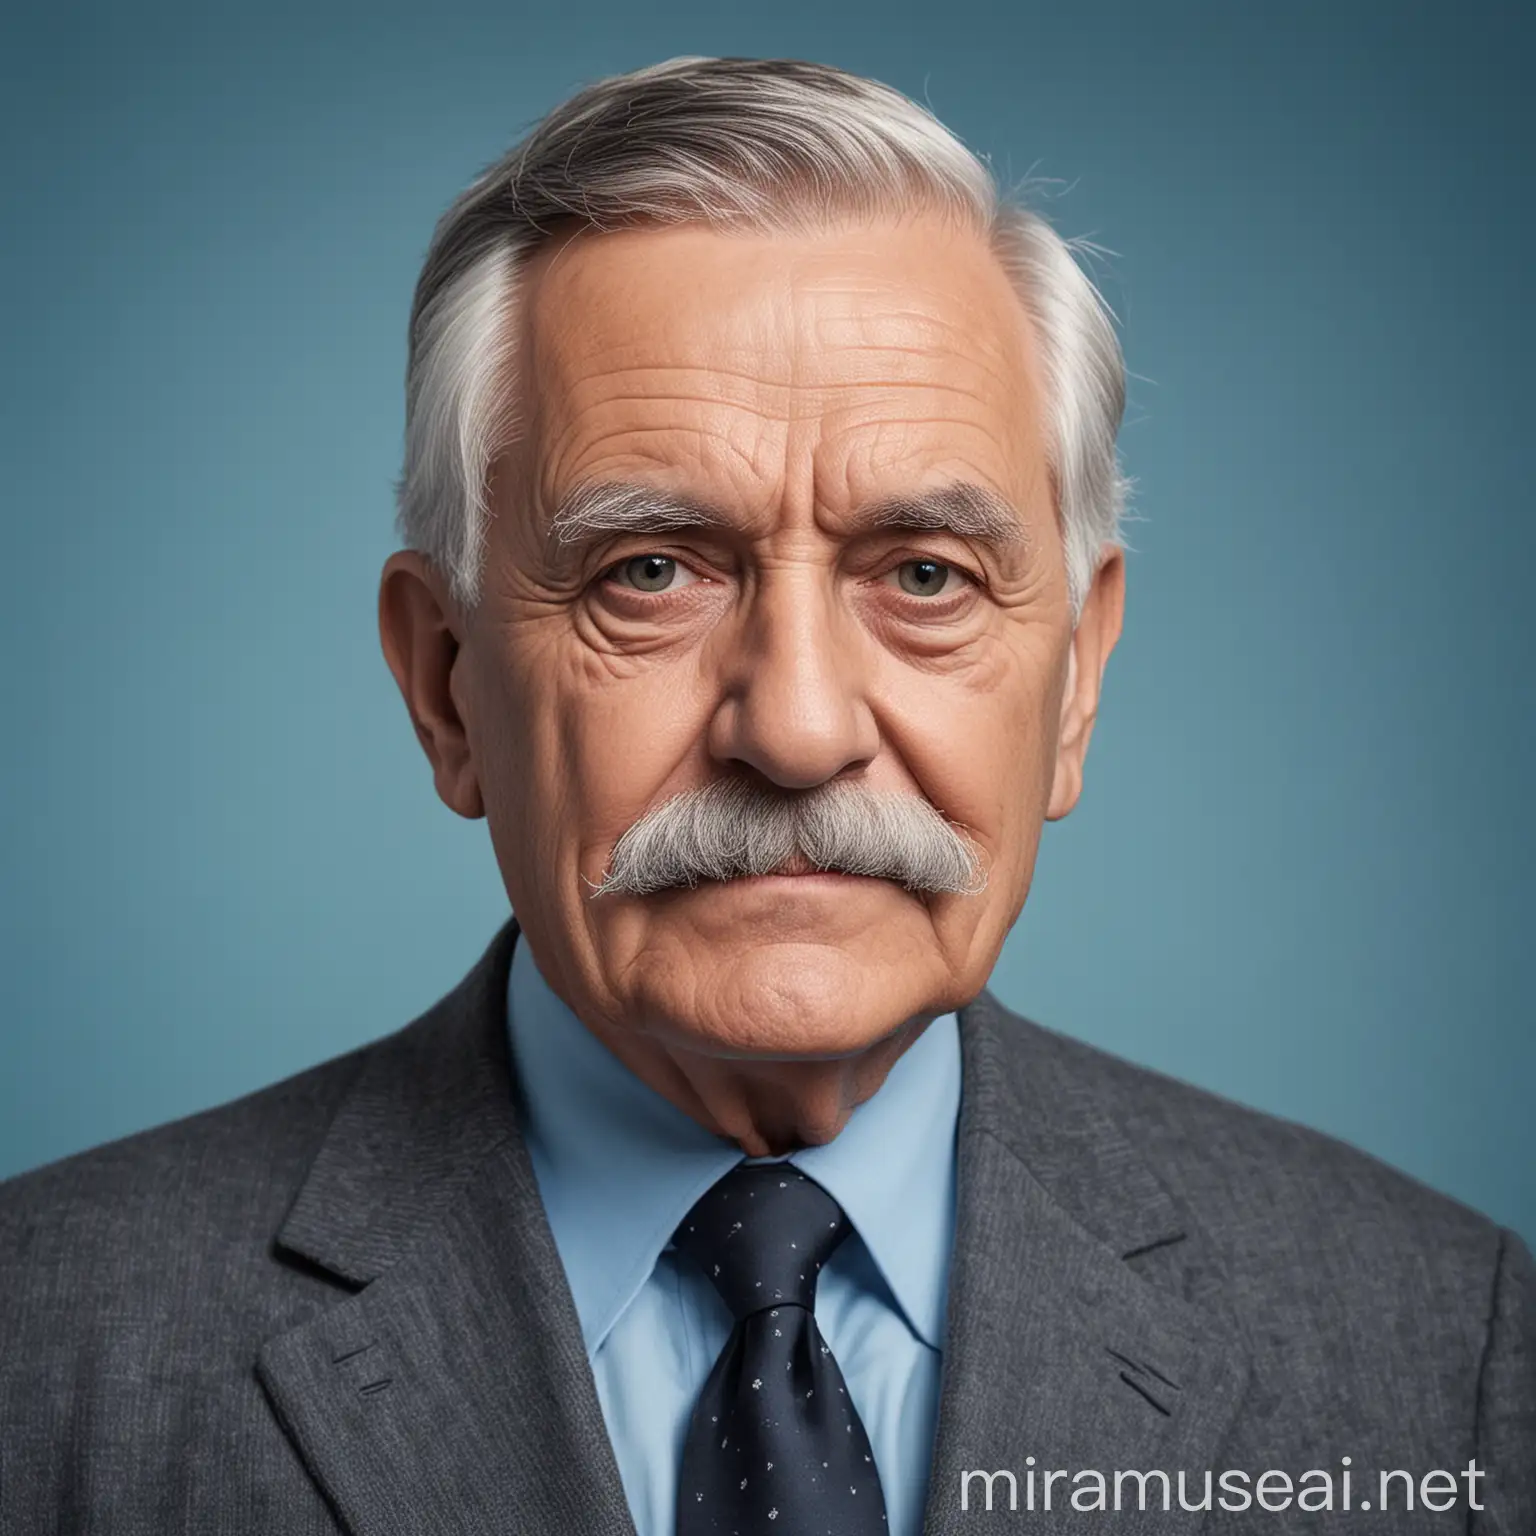 Elderly President with Grey Mustache on Blue Background